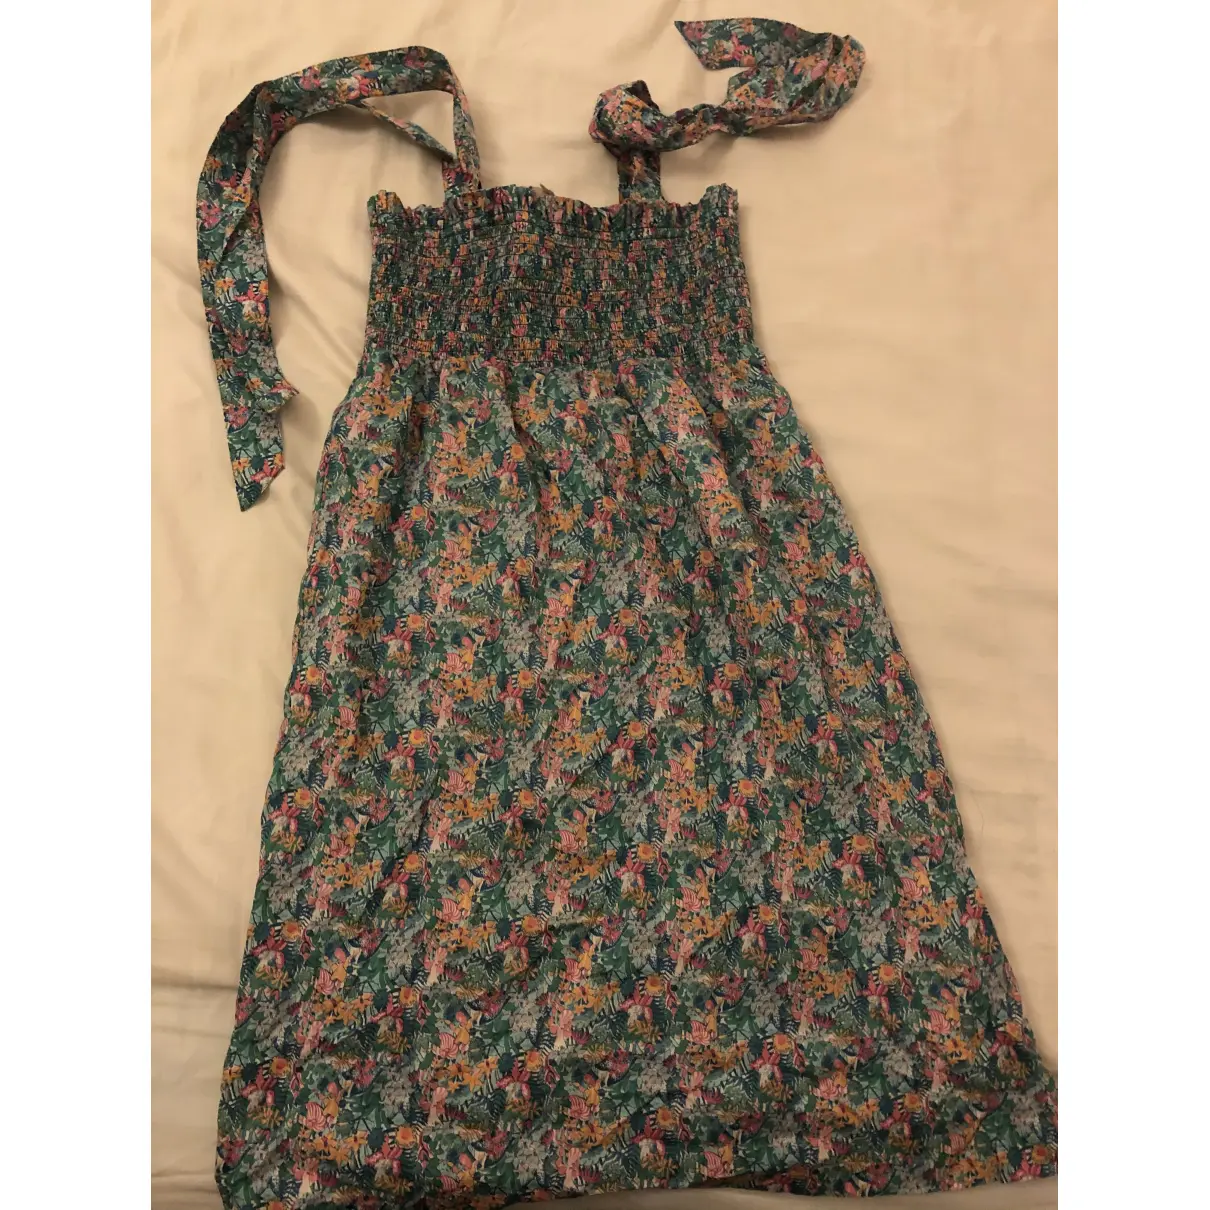 Buy Sézane Spring Summer 2019 mid-length dress online